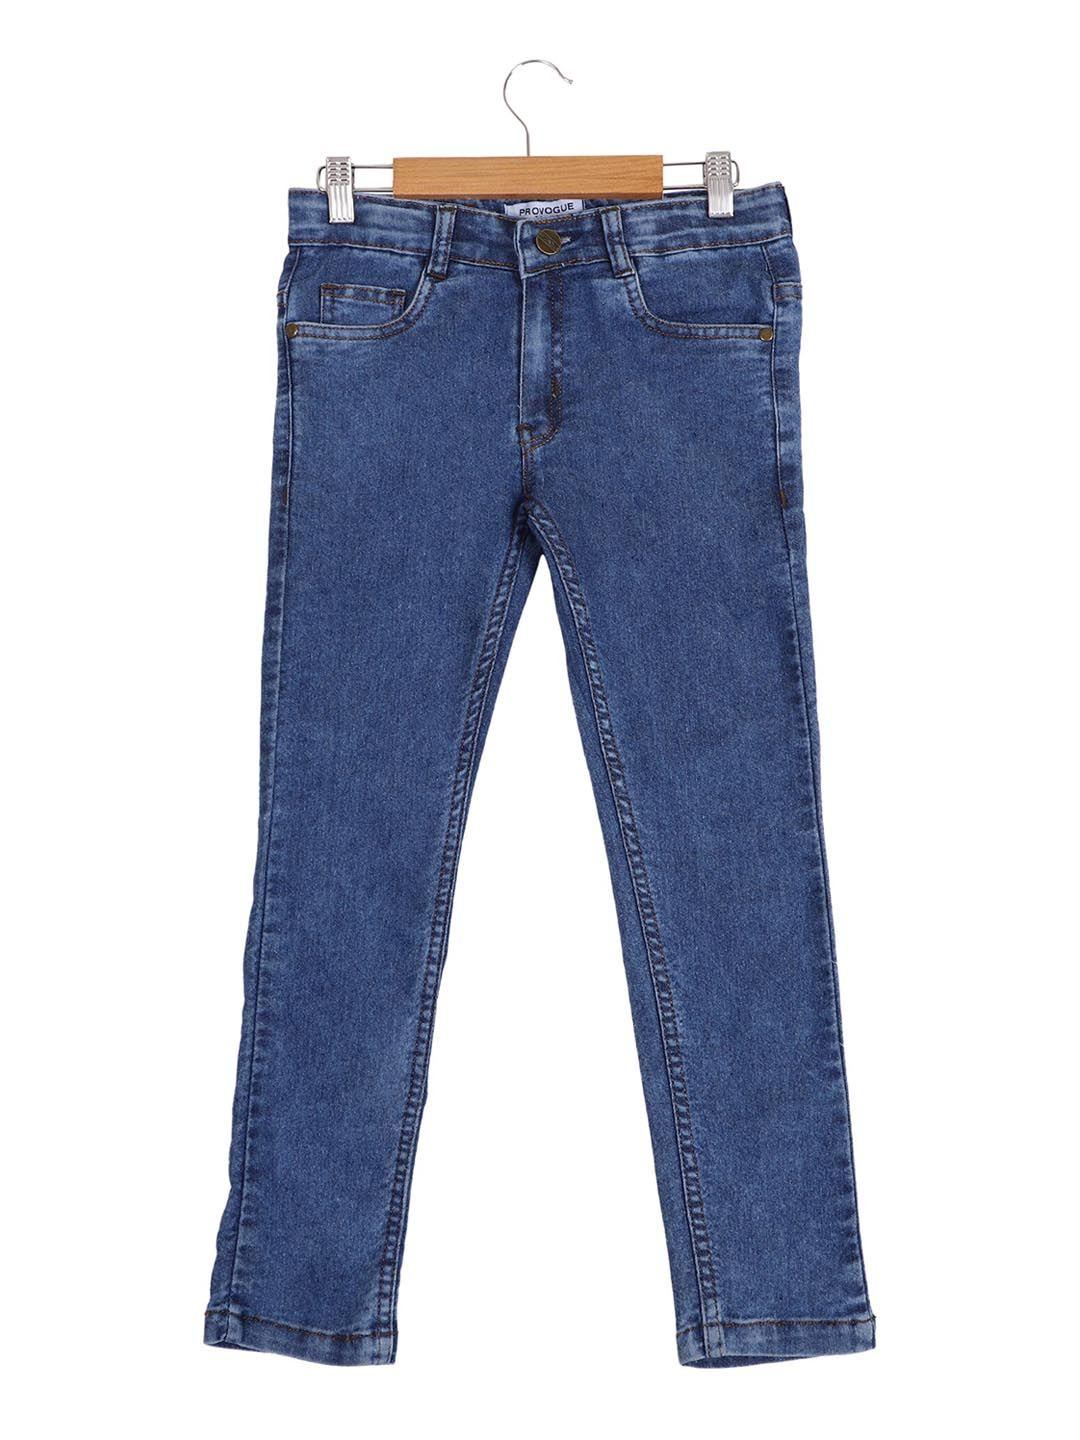 provogue-boys-mid-rise-medium-shade-jeans